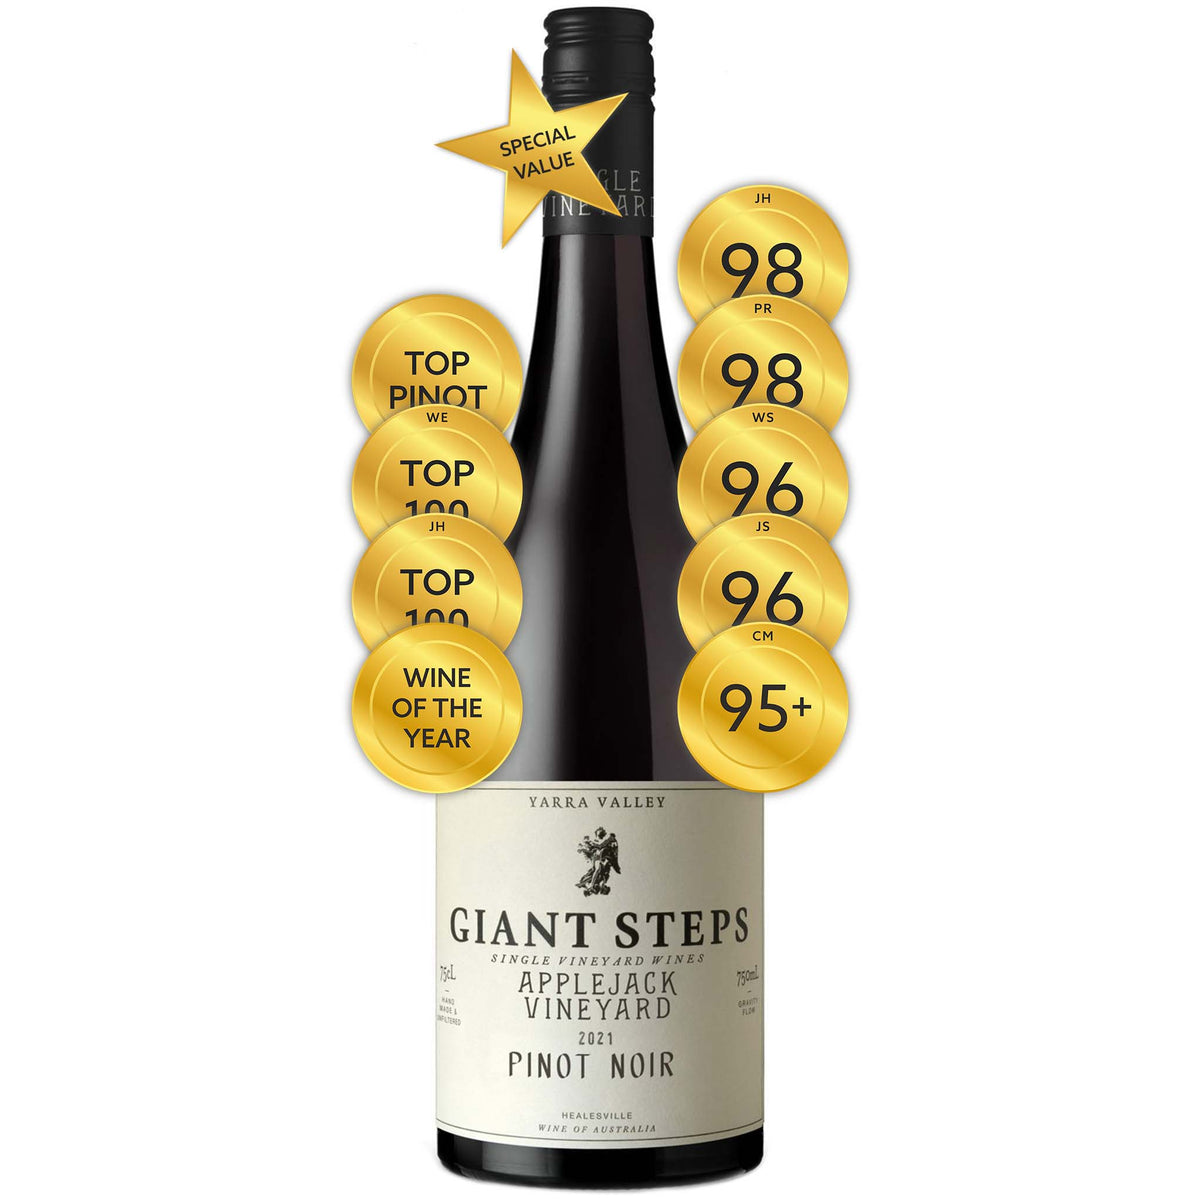 Giant-Steps-Applejack-Vineyard-Pinot-Noir-2021